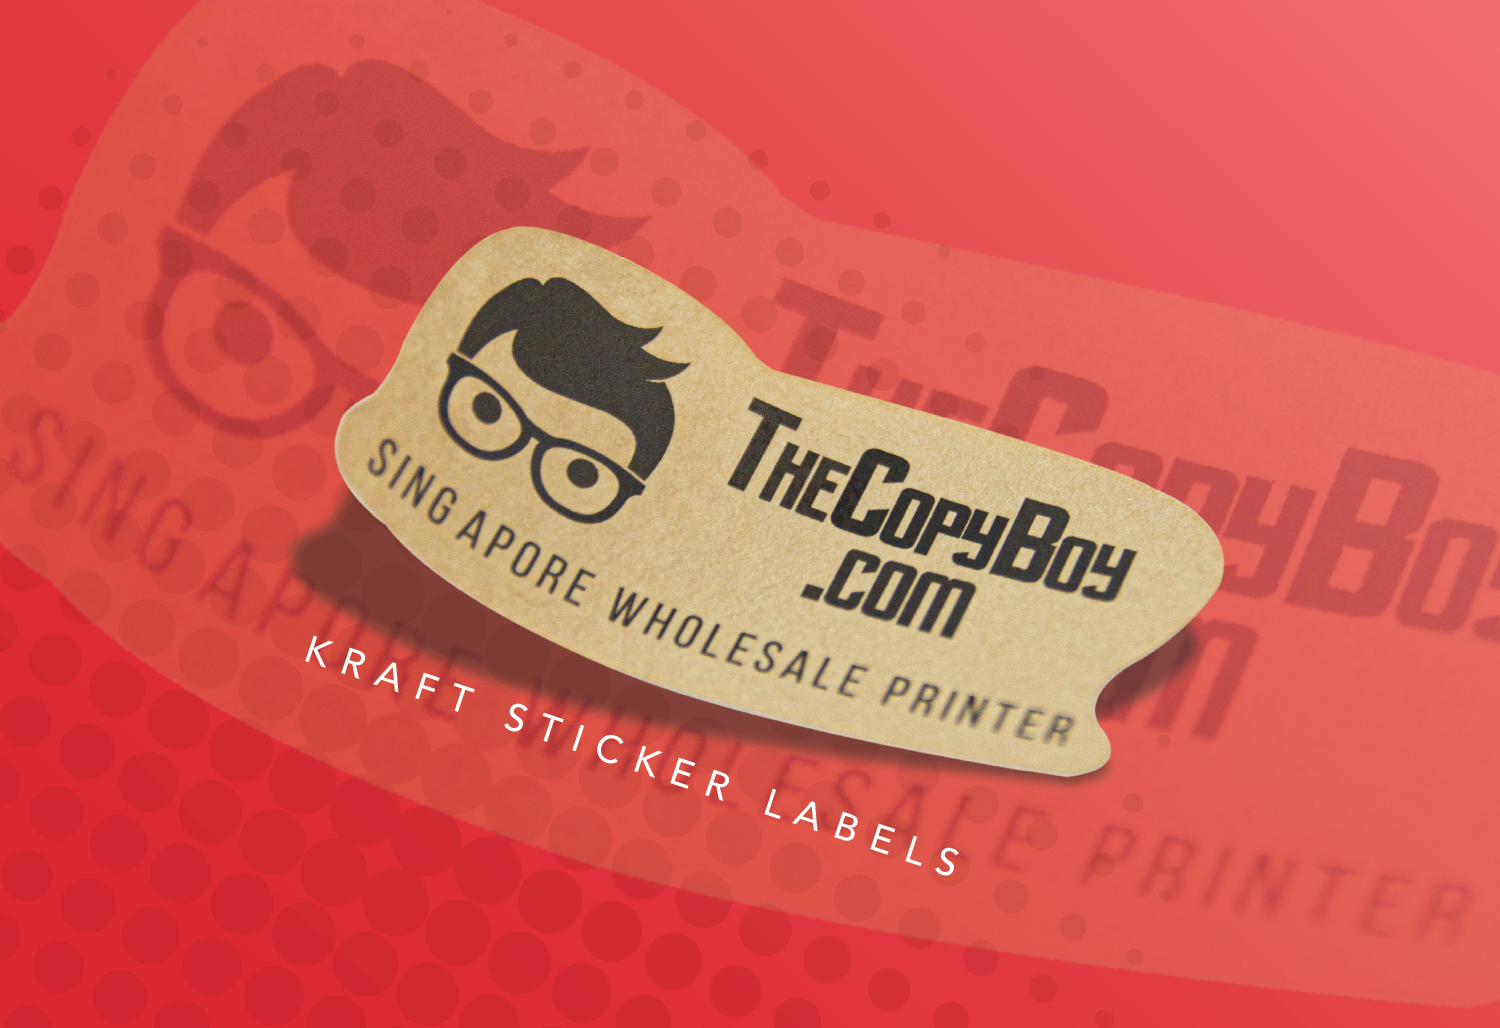 Kraft Stickers Labels (Kiss-cut) – The Copy Boy